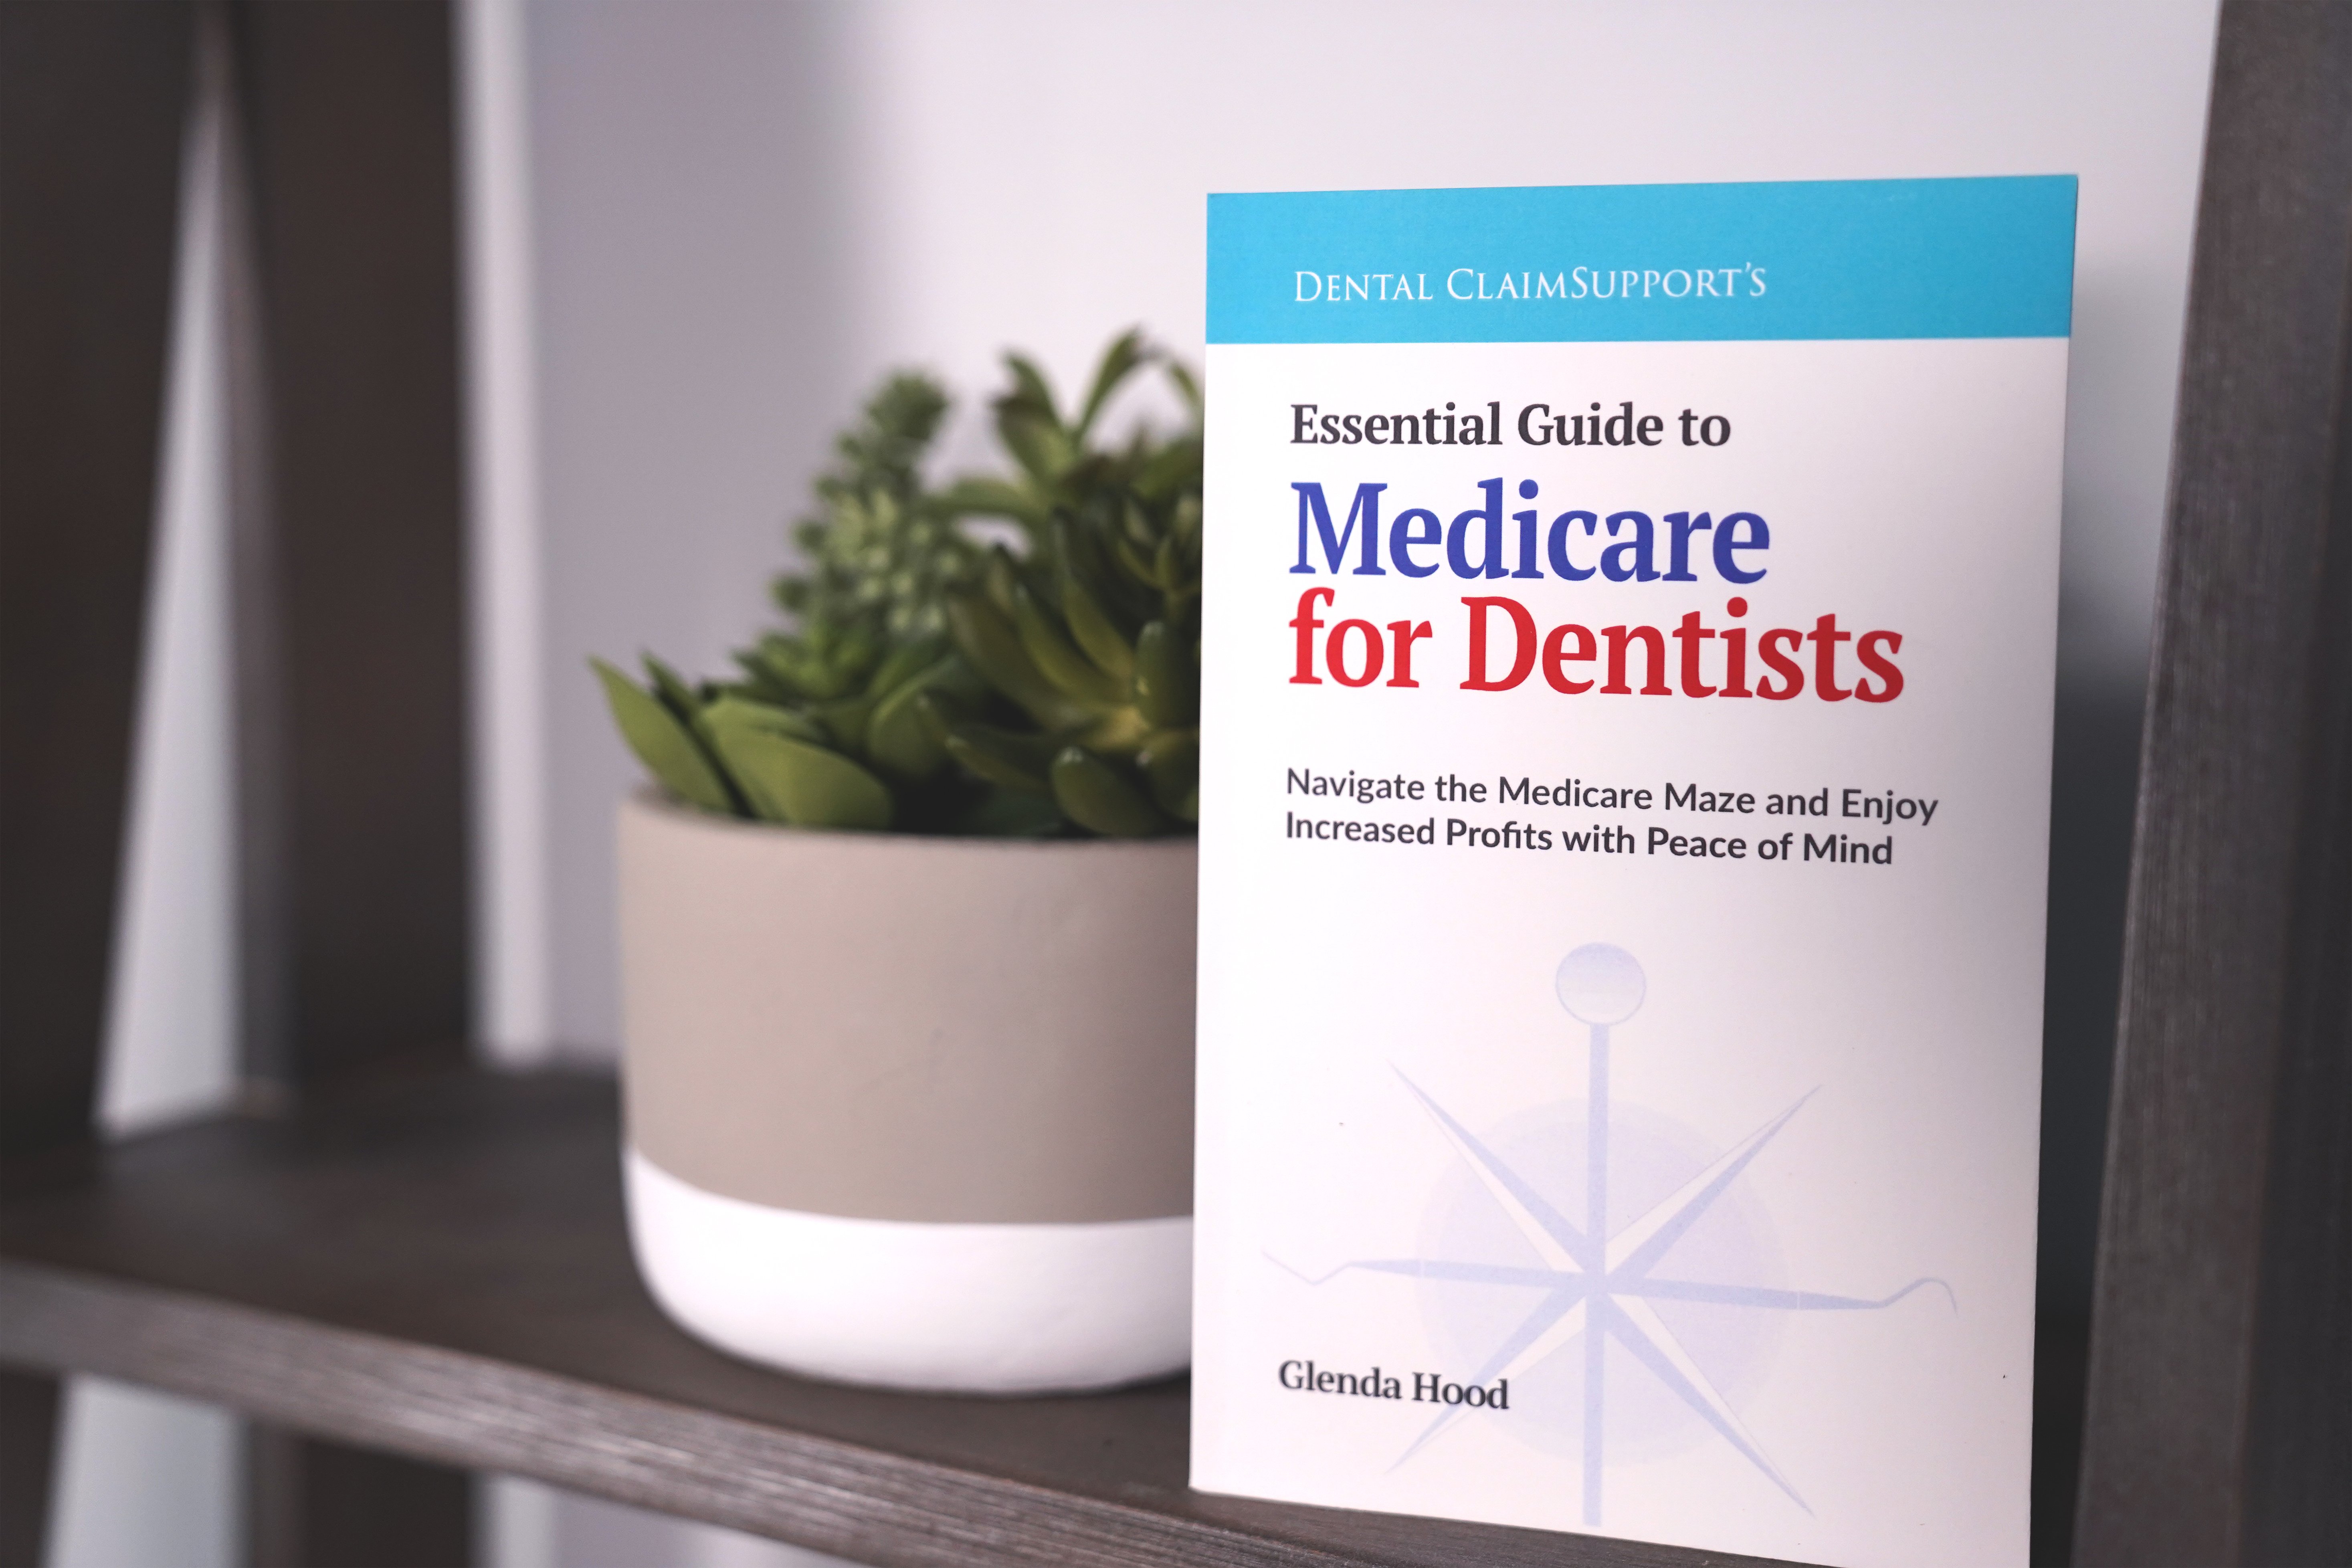 Dental ClaimSupport has published a book on Medicare billing for dentists